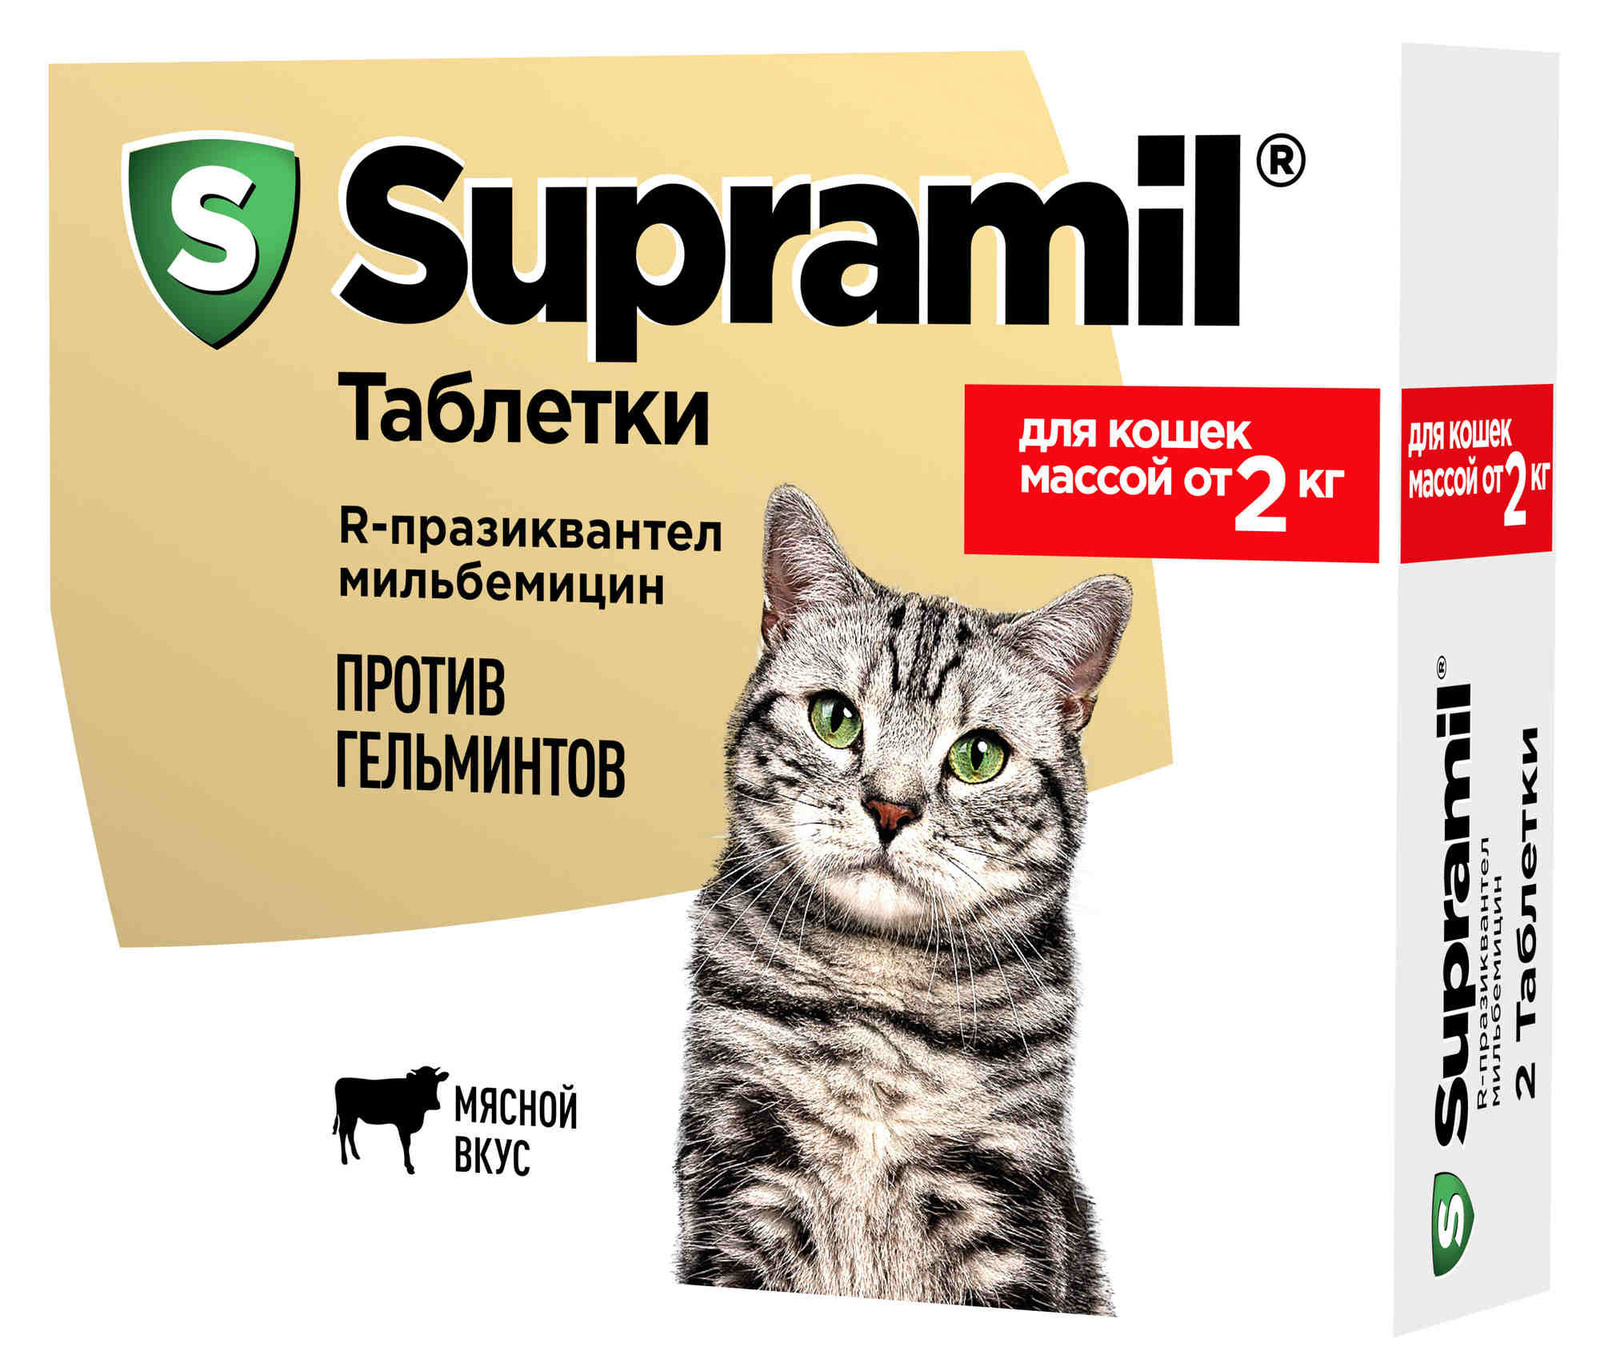 Астрафарм Астрафарм антигельминтный препарат Supramil для кошек массой от 2 кг (таблетки) (20 г)